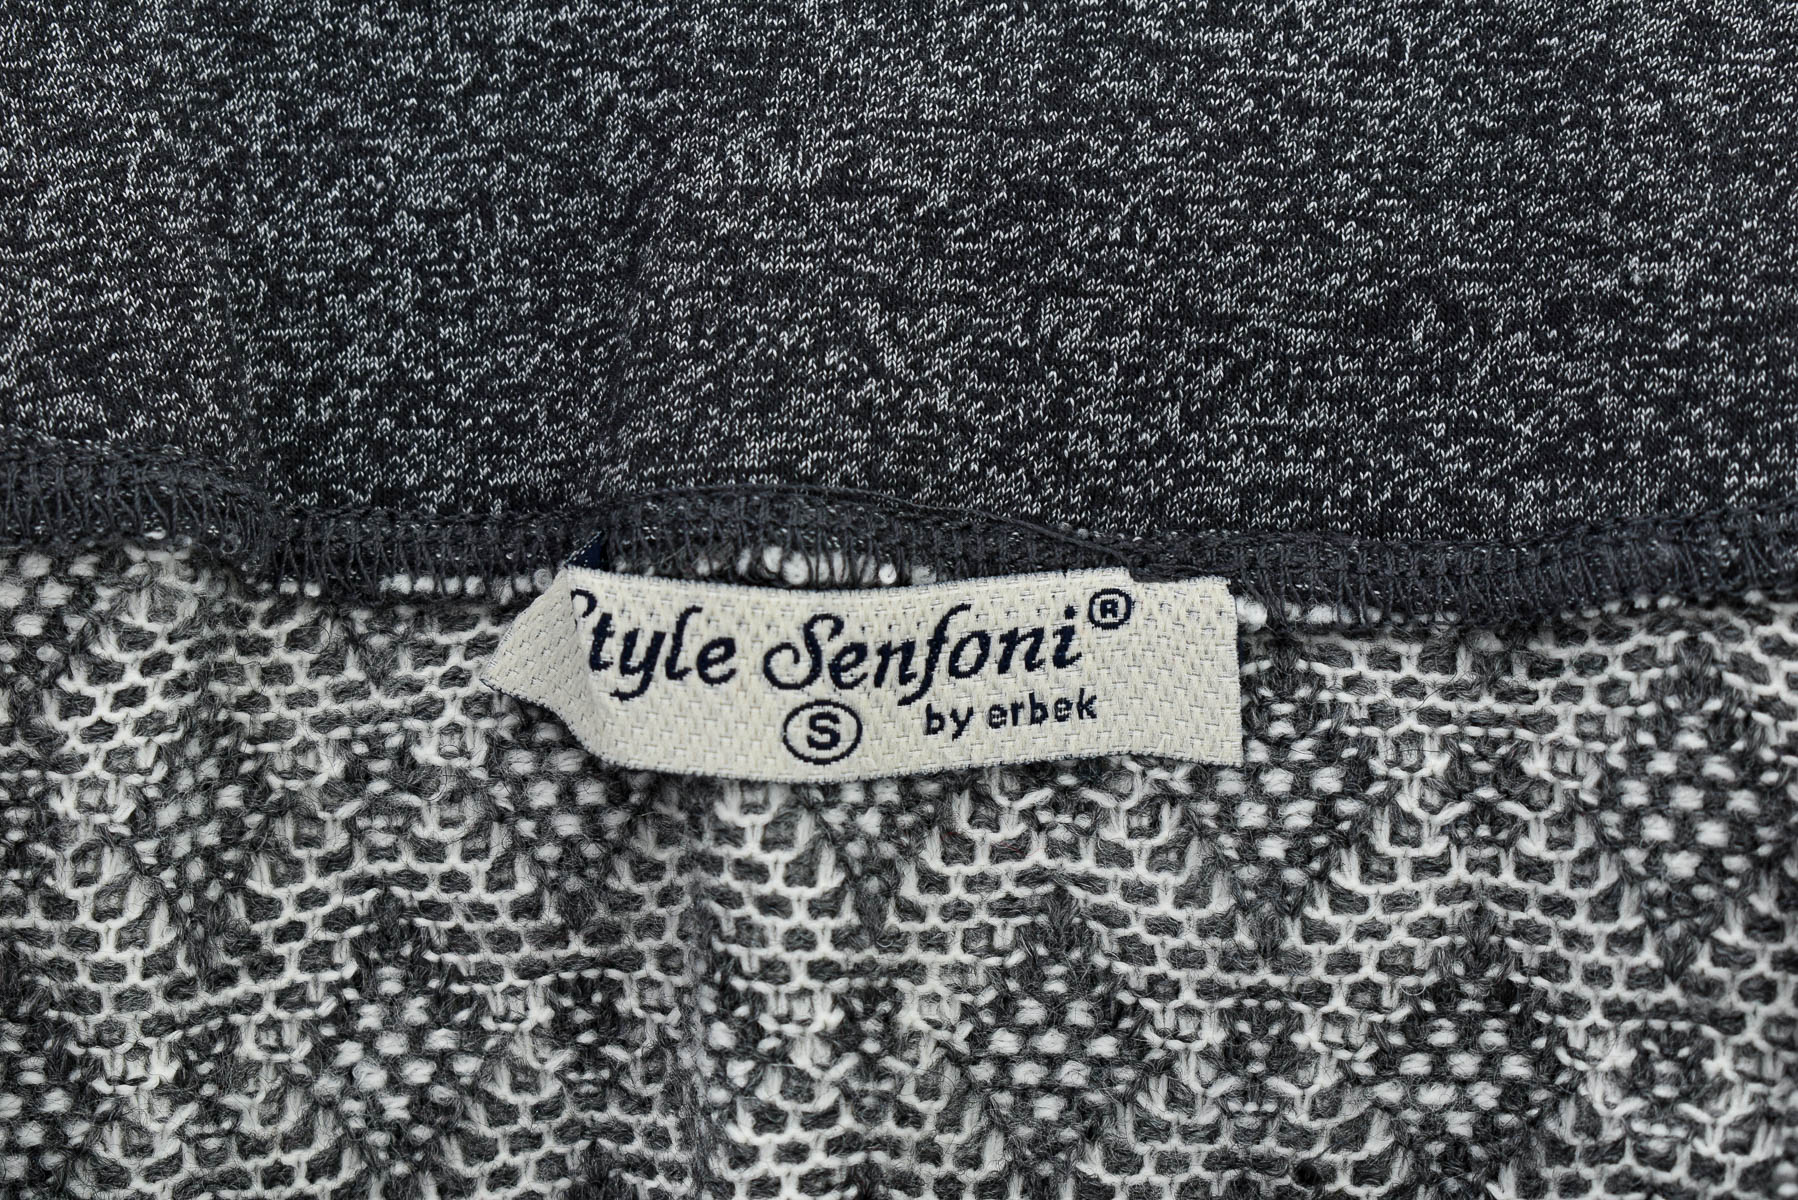 Cardigan / Jachetă de damă - Style Sengoni by erbek - 2